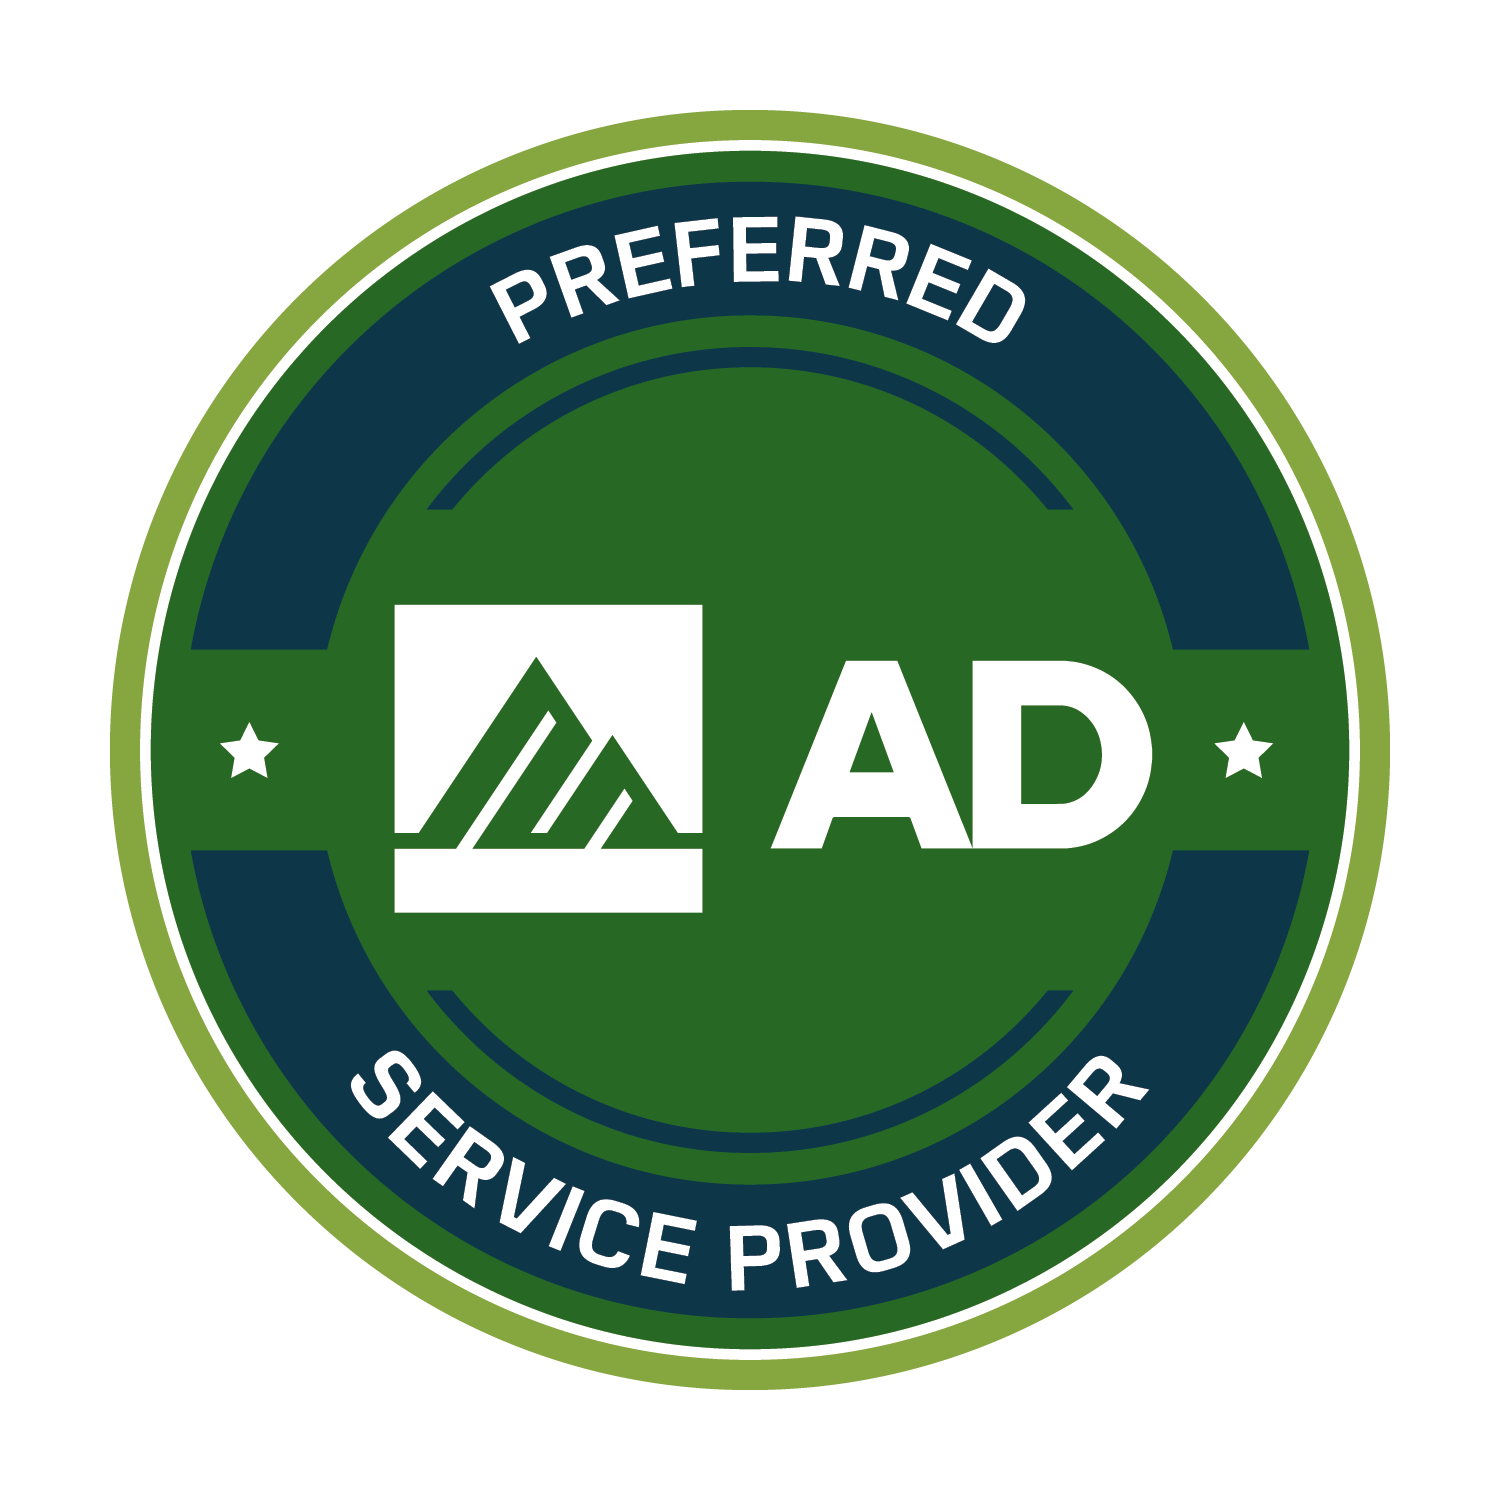 Preferred Service Provider Badges